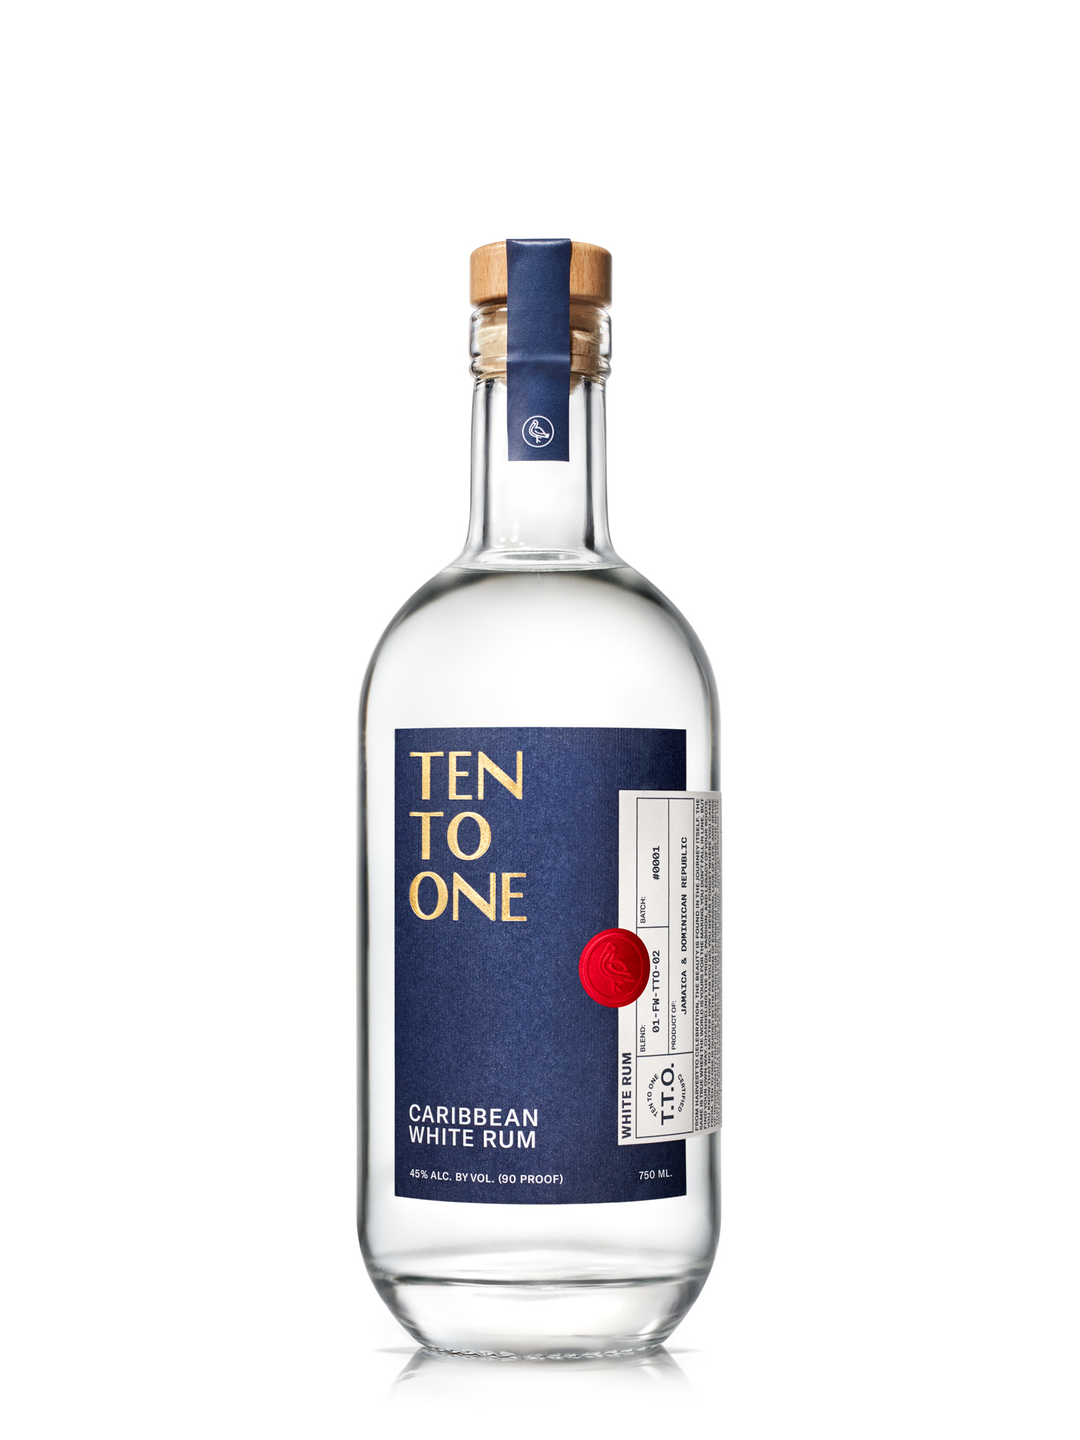 Ten To One Wht Rum 90 Prf 750 ml